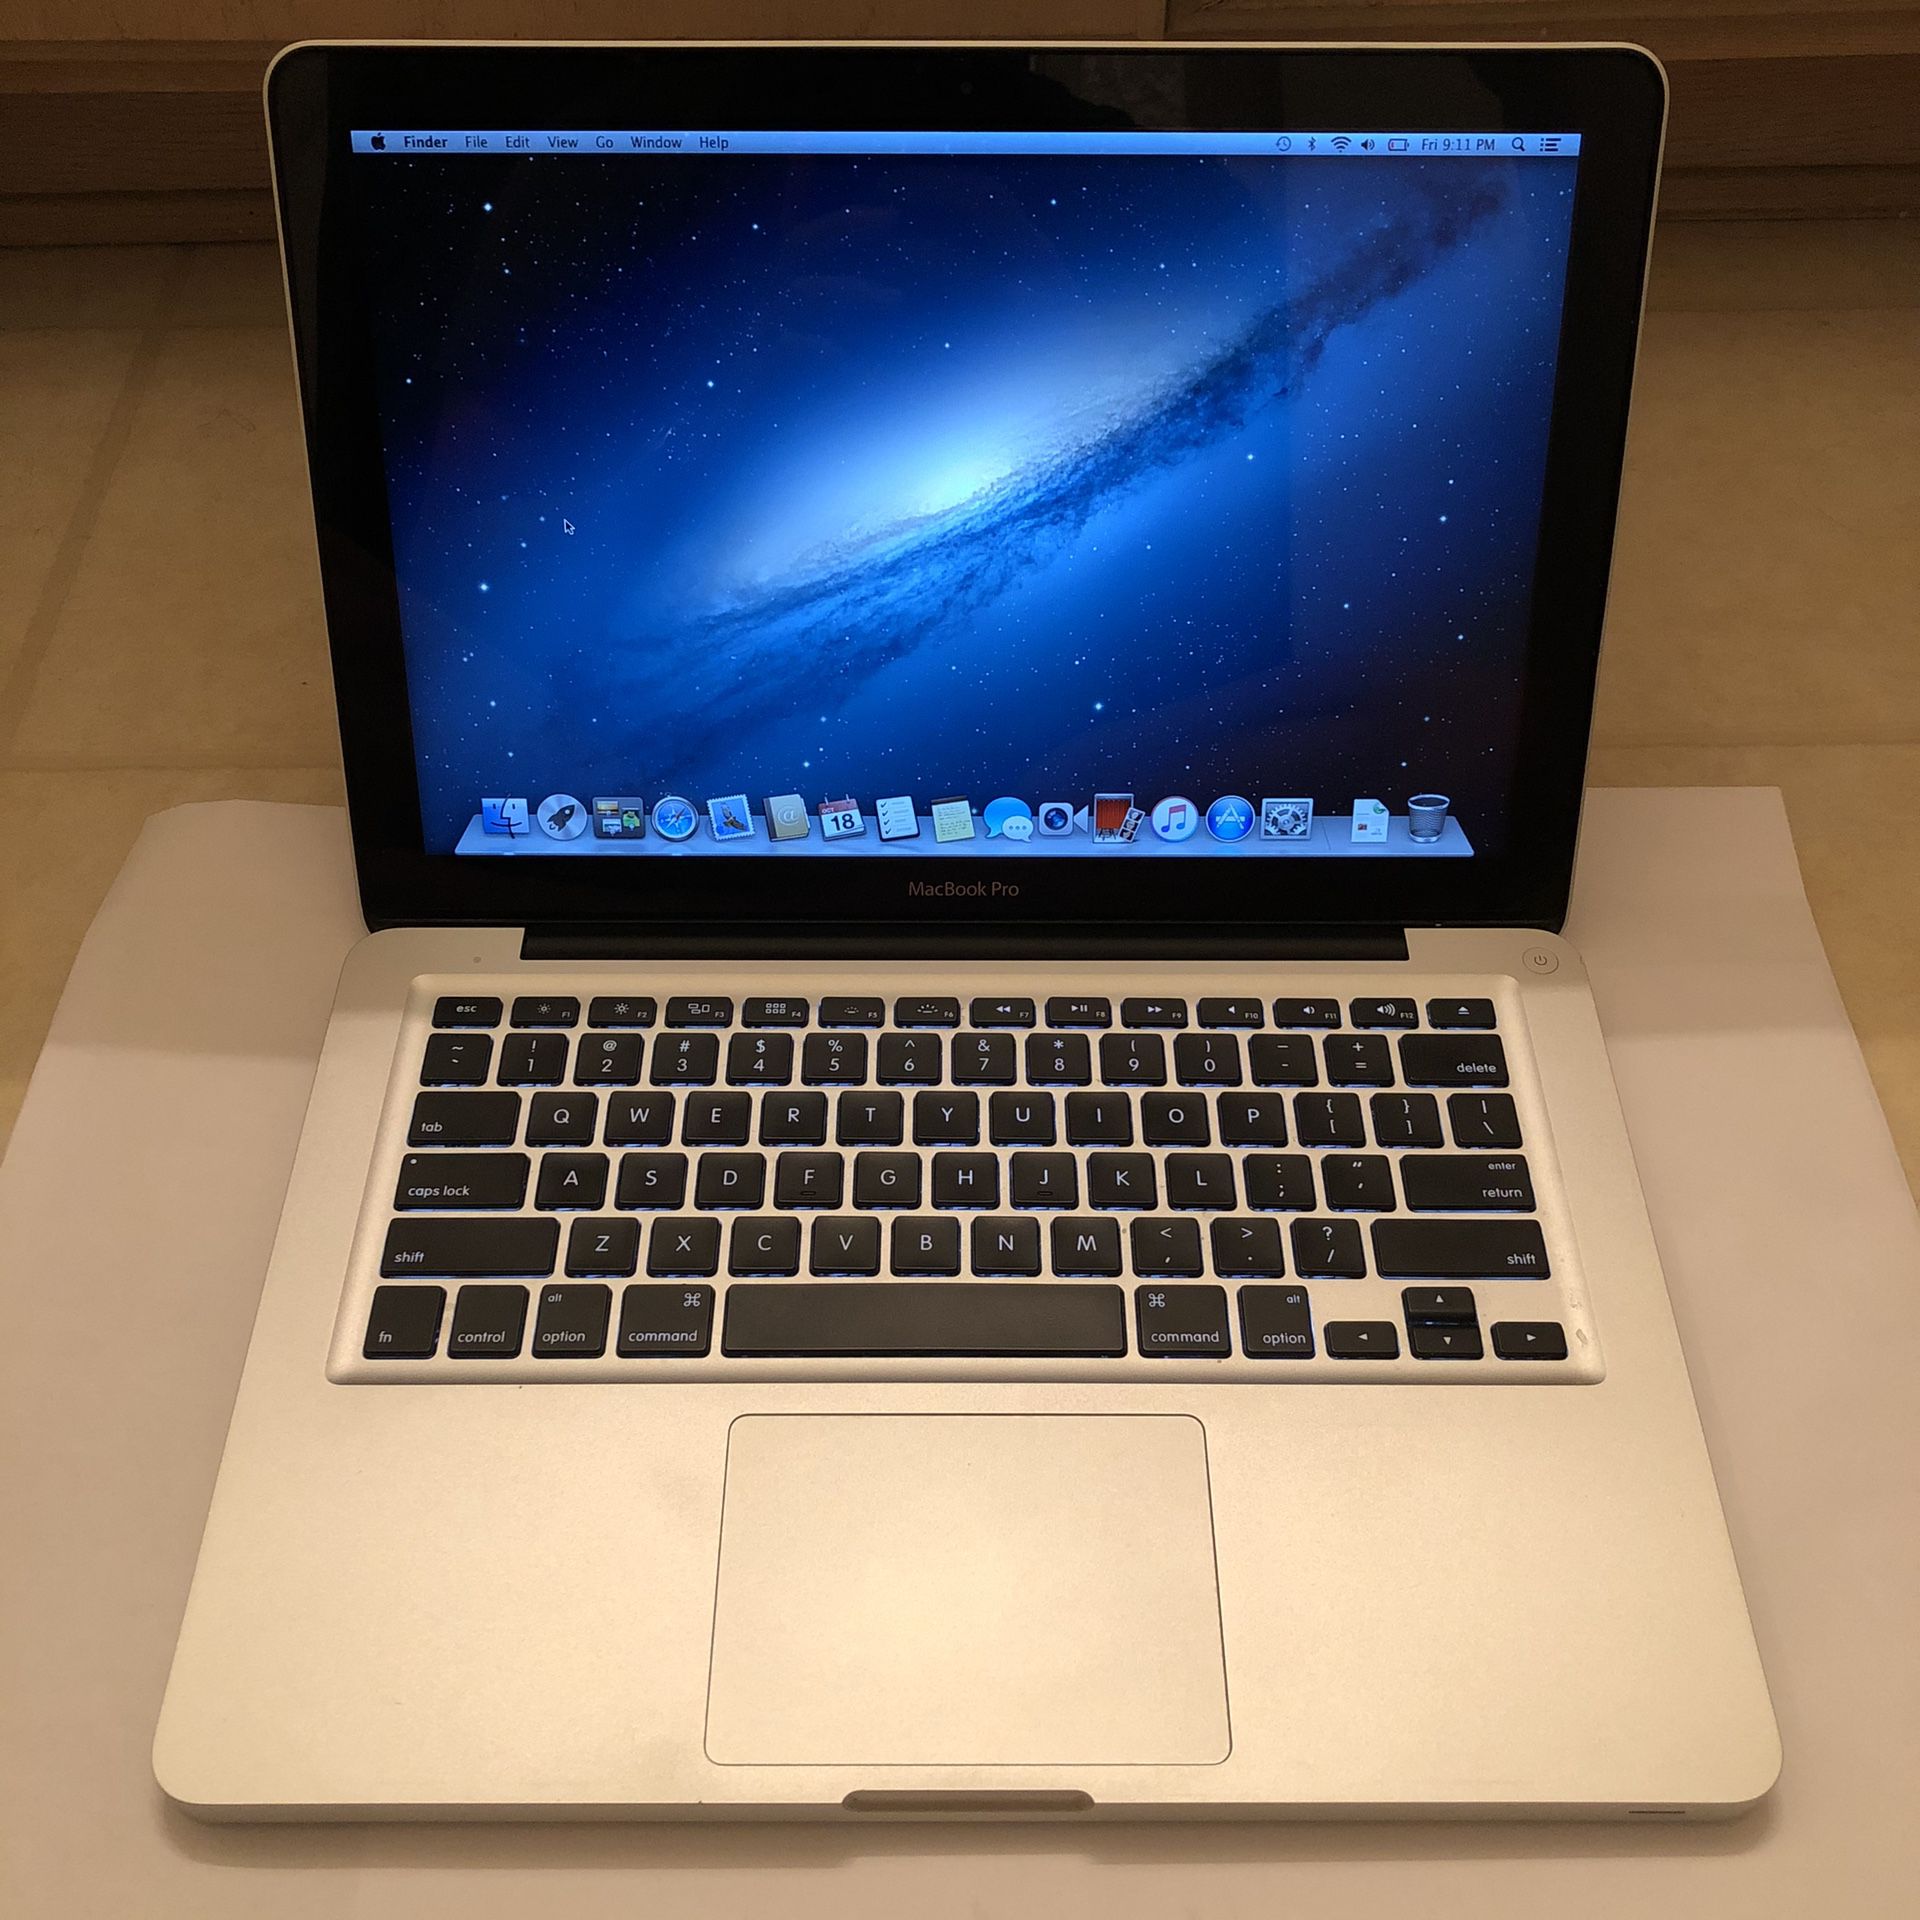 Apple MacBook Pro 13 inch Mid 2012 Laptop